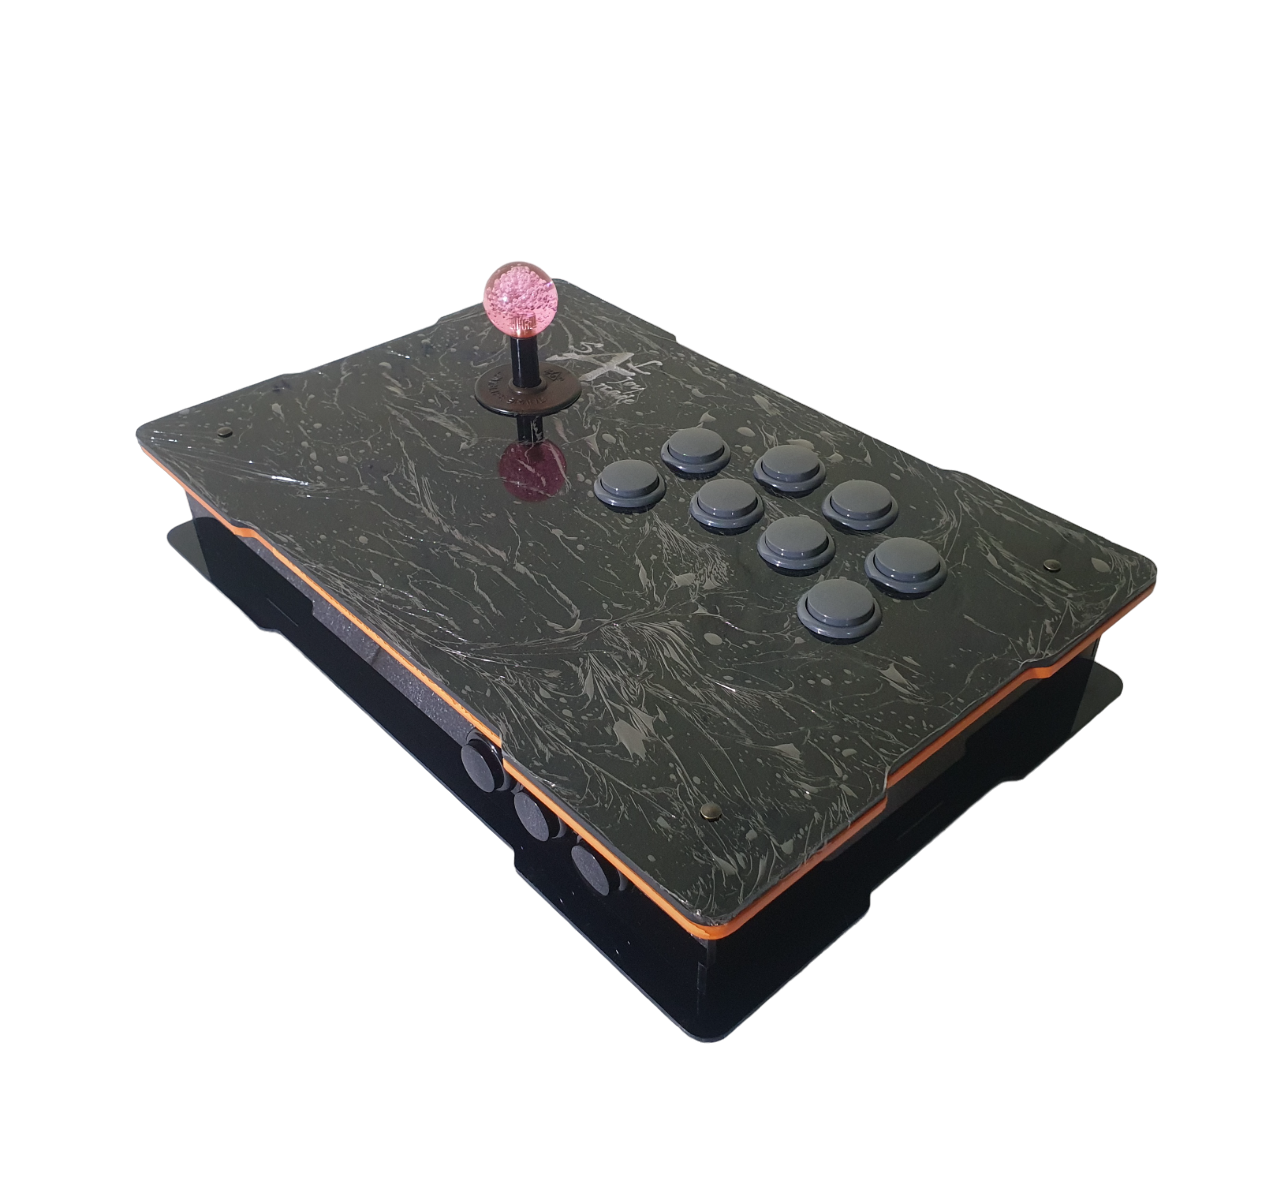 SALjoyArcade PS4 Usb Arcade joystick gamepad for Playstation 4, Playstation3, Windows and Android